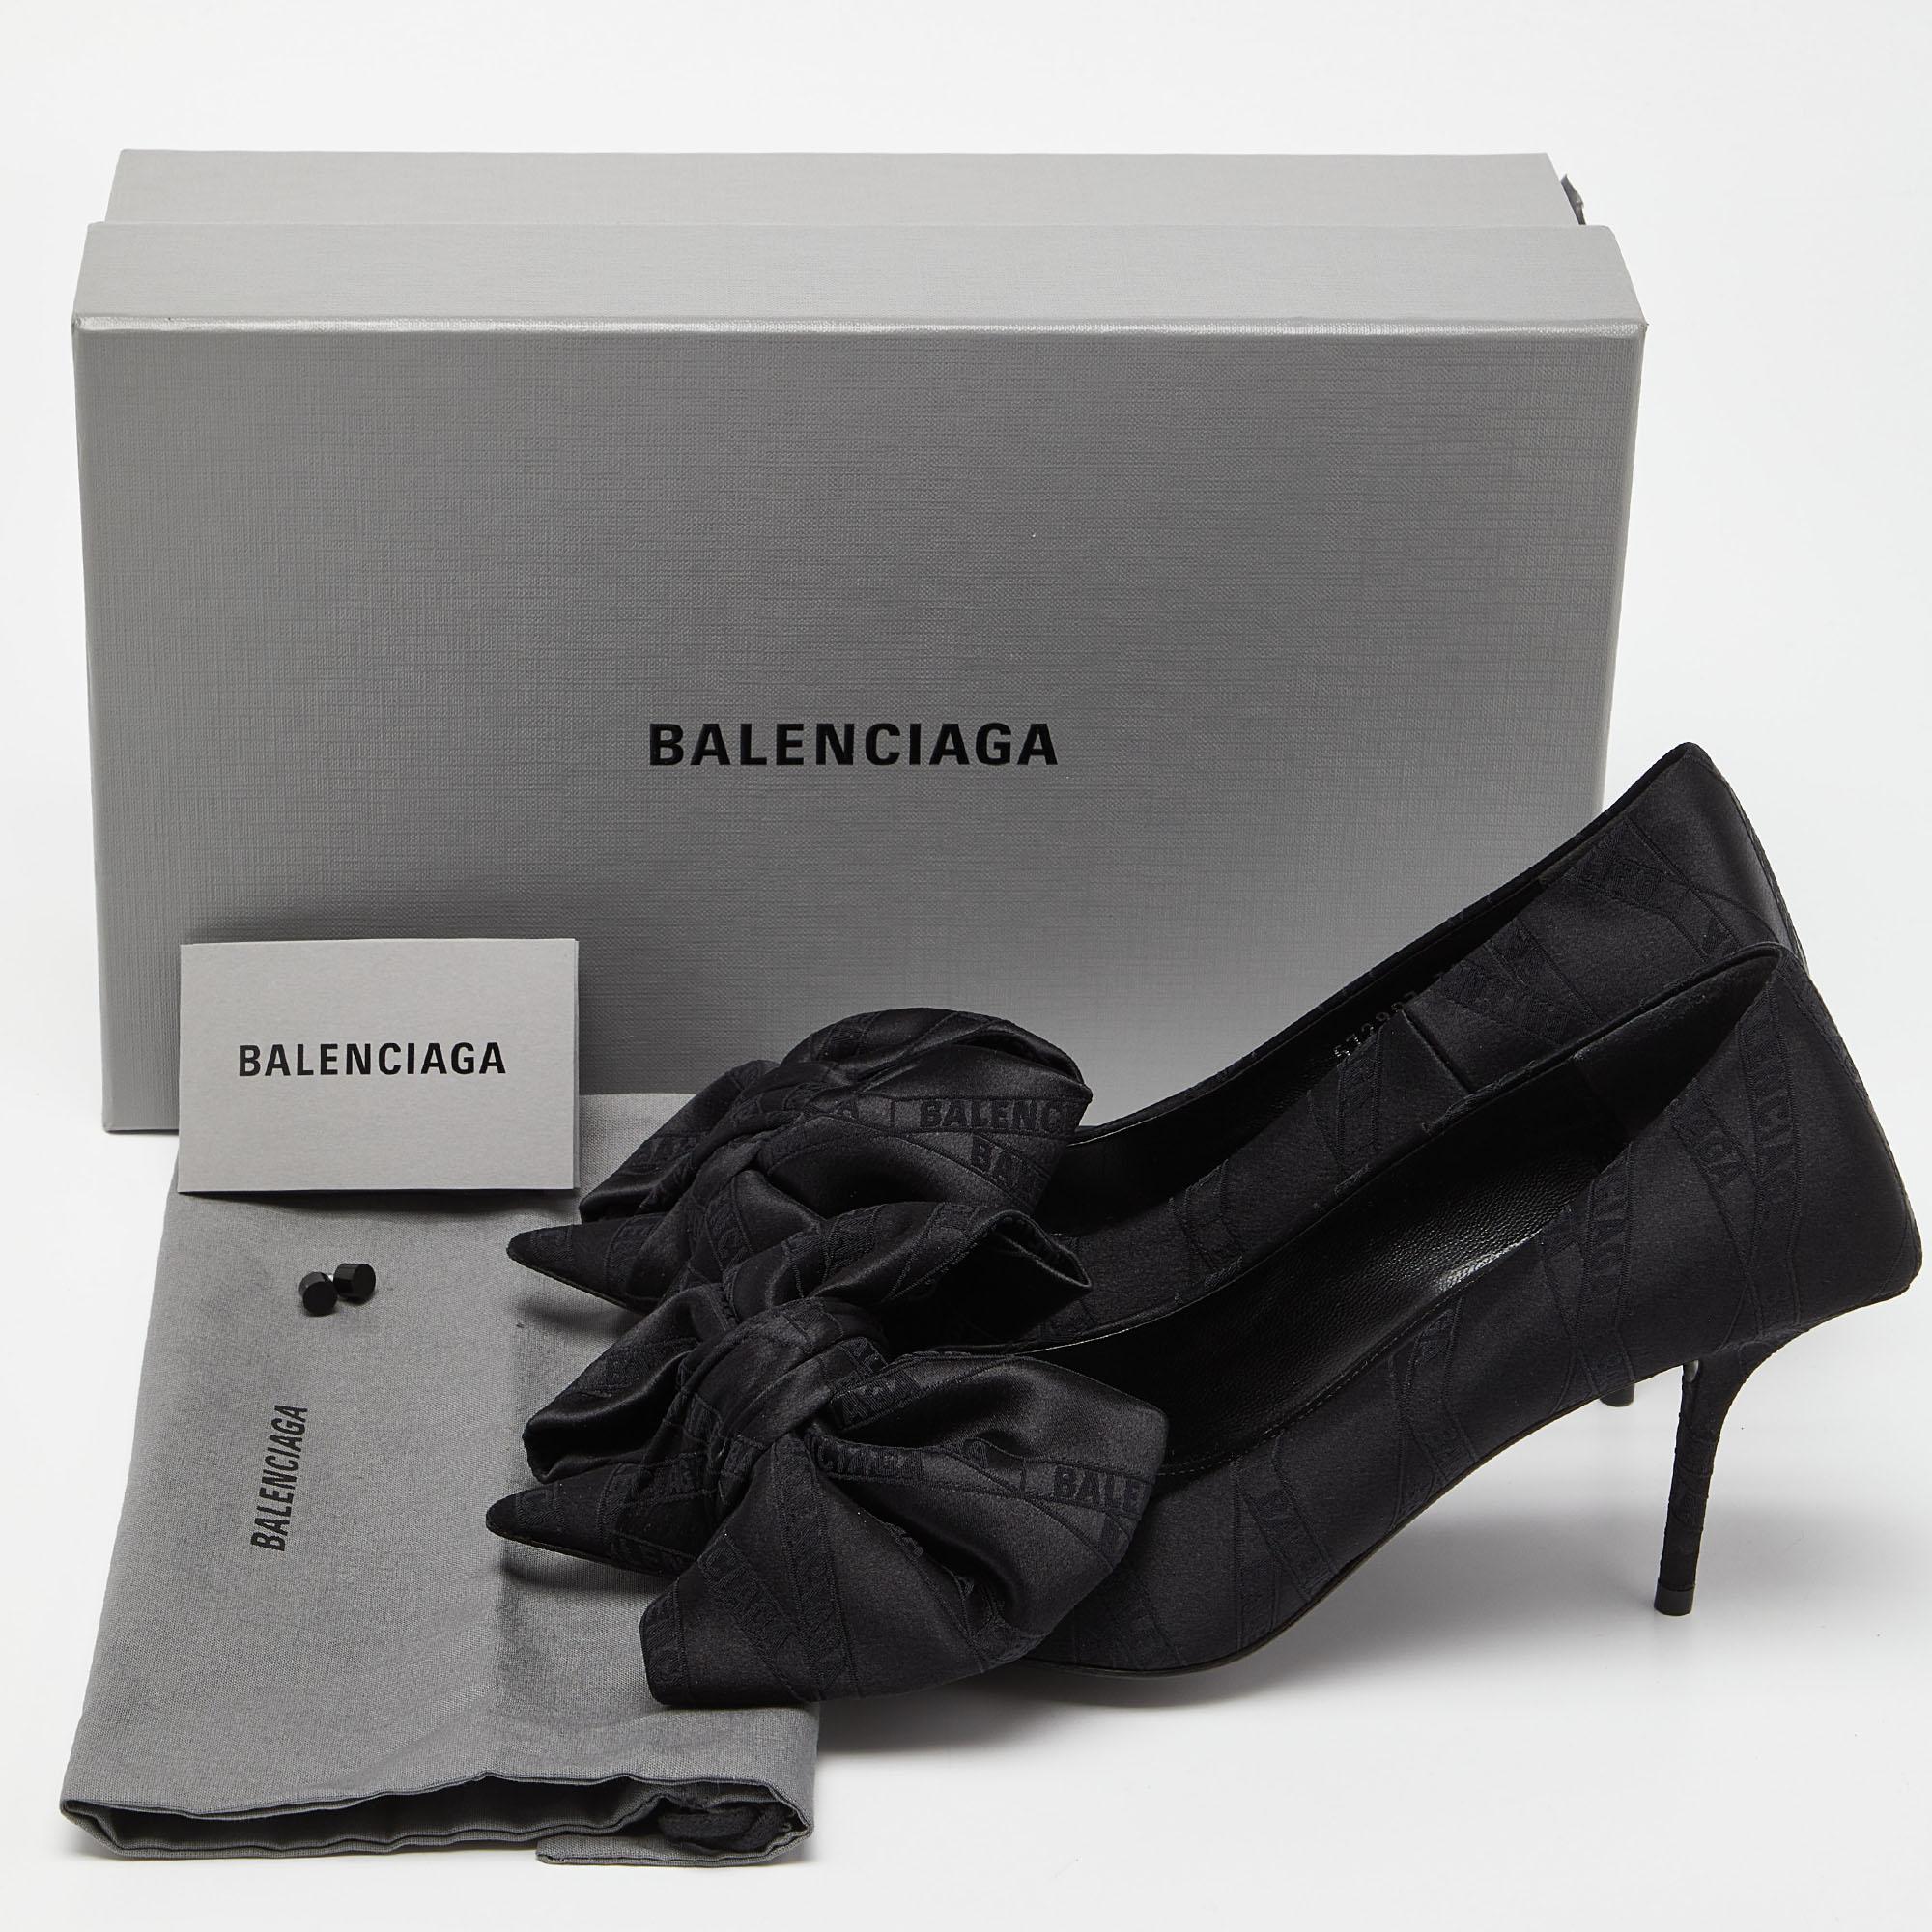 Balenciaga Black Jacquard Bow Knife Pumps Size 38 5